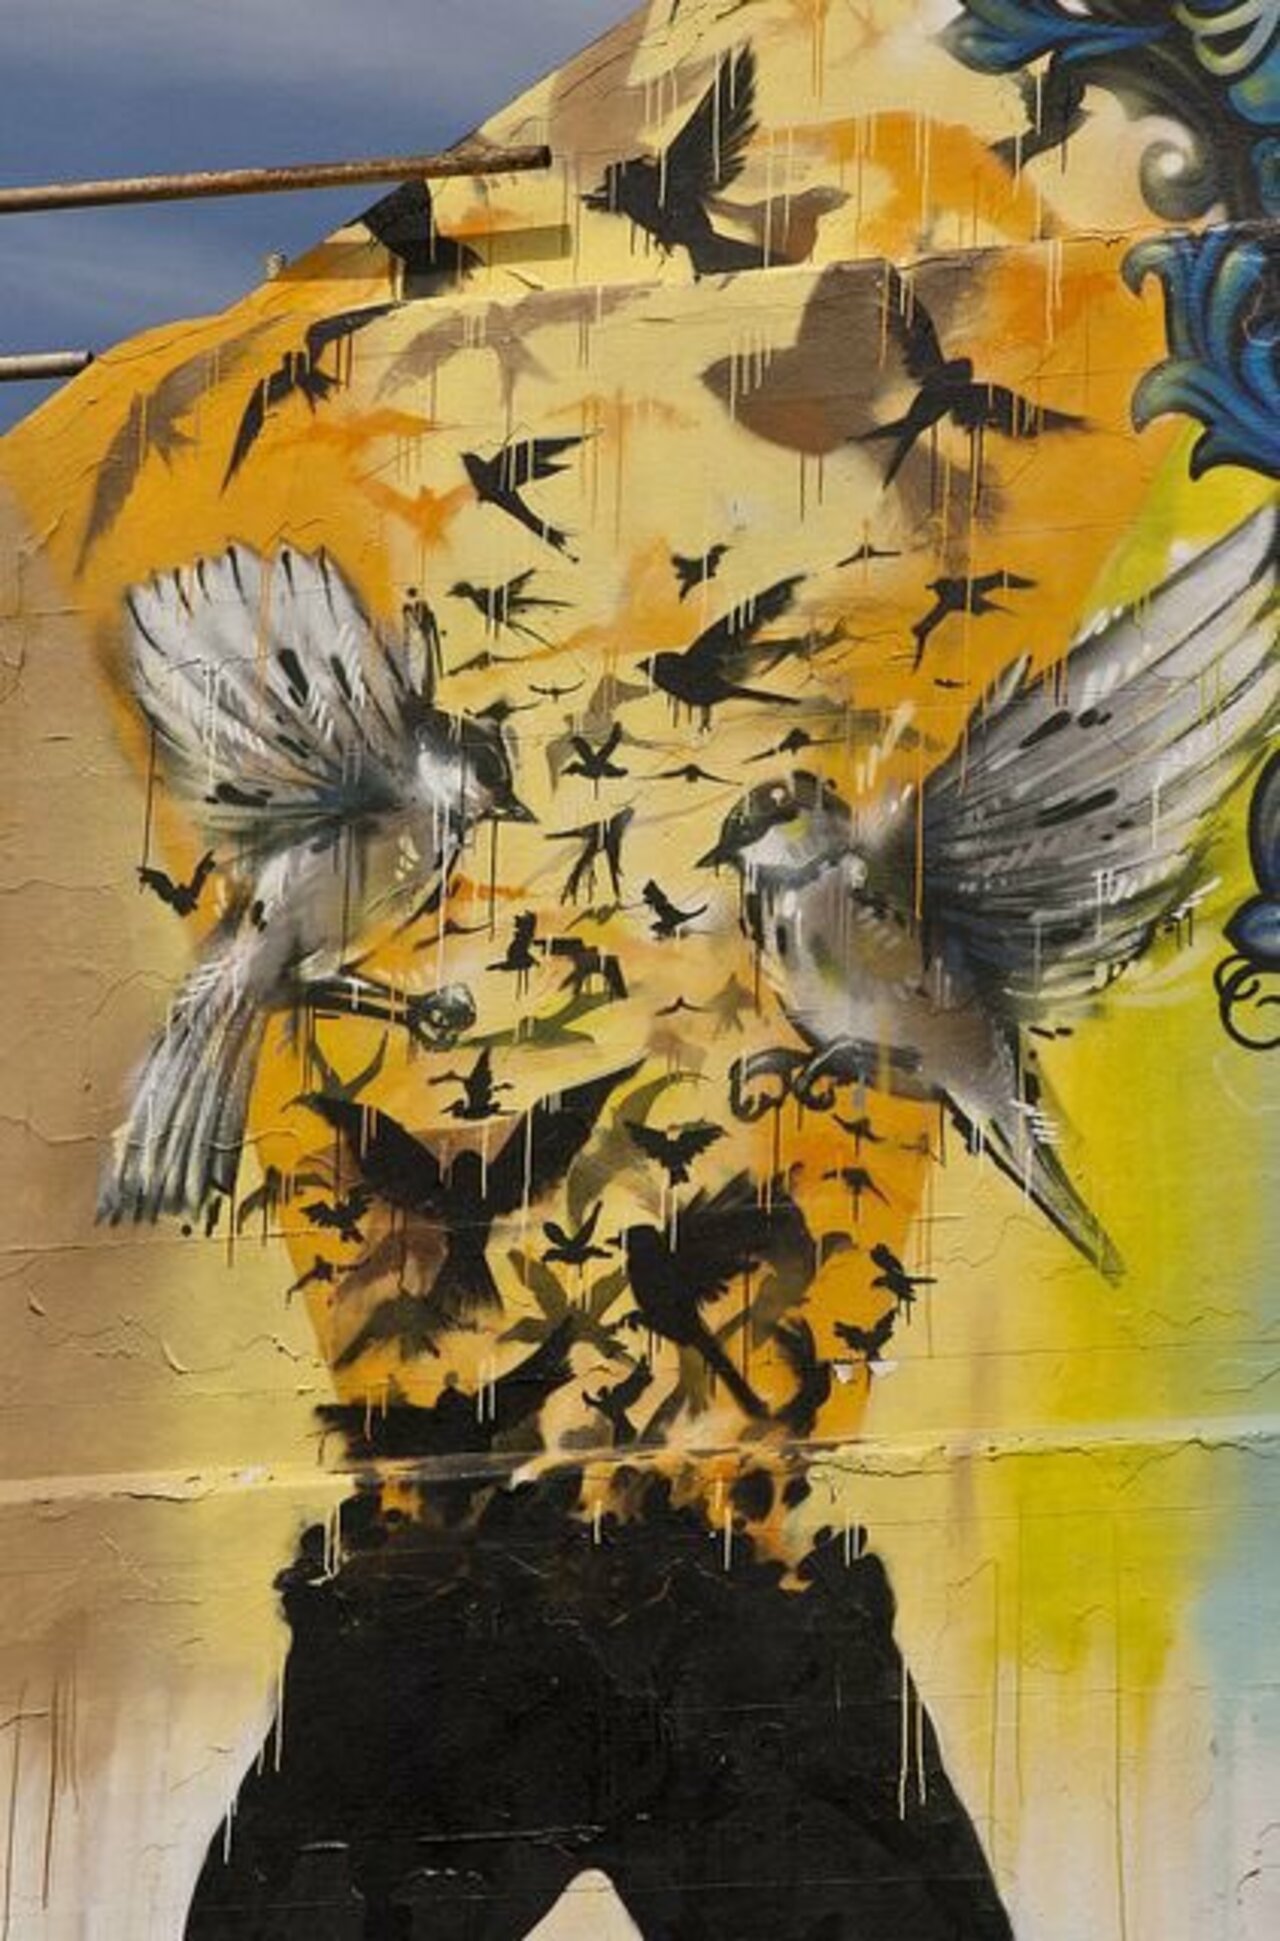 #streetart #urbanart #graffiti #mural in Brighton, UK https://t.co/afOXRD7NFC